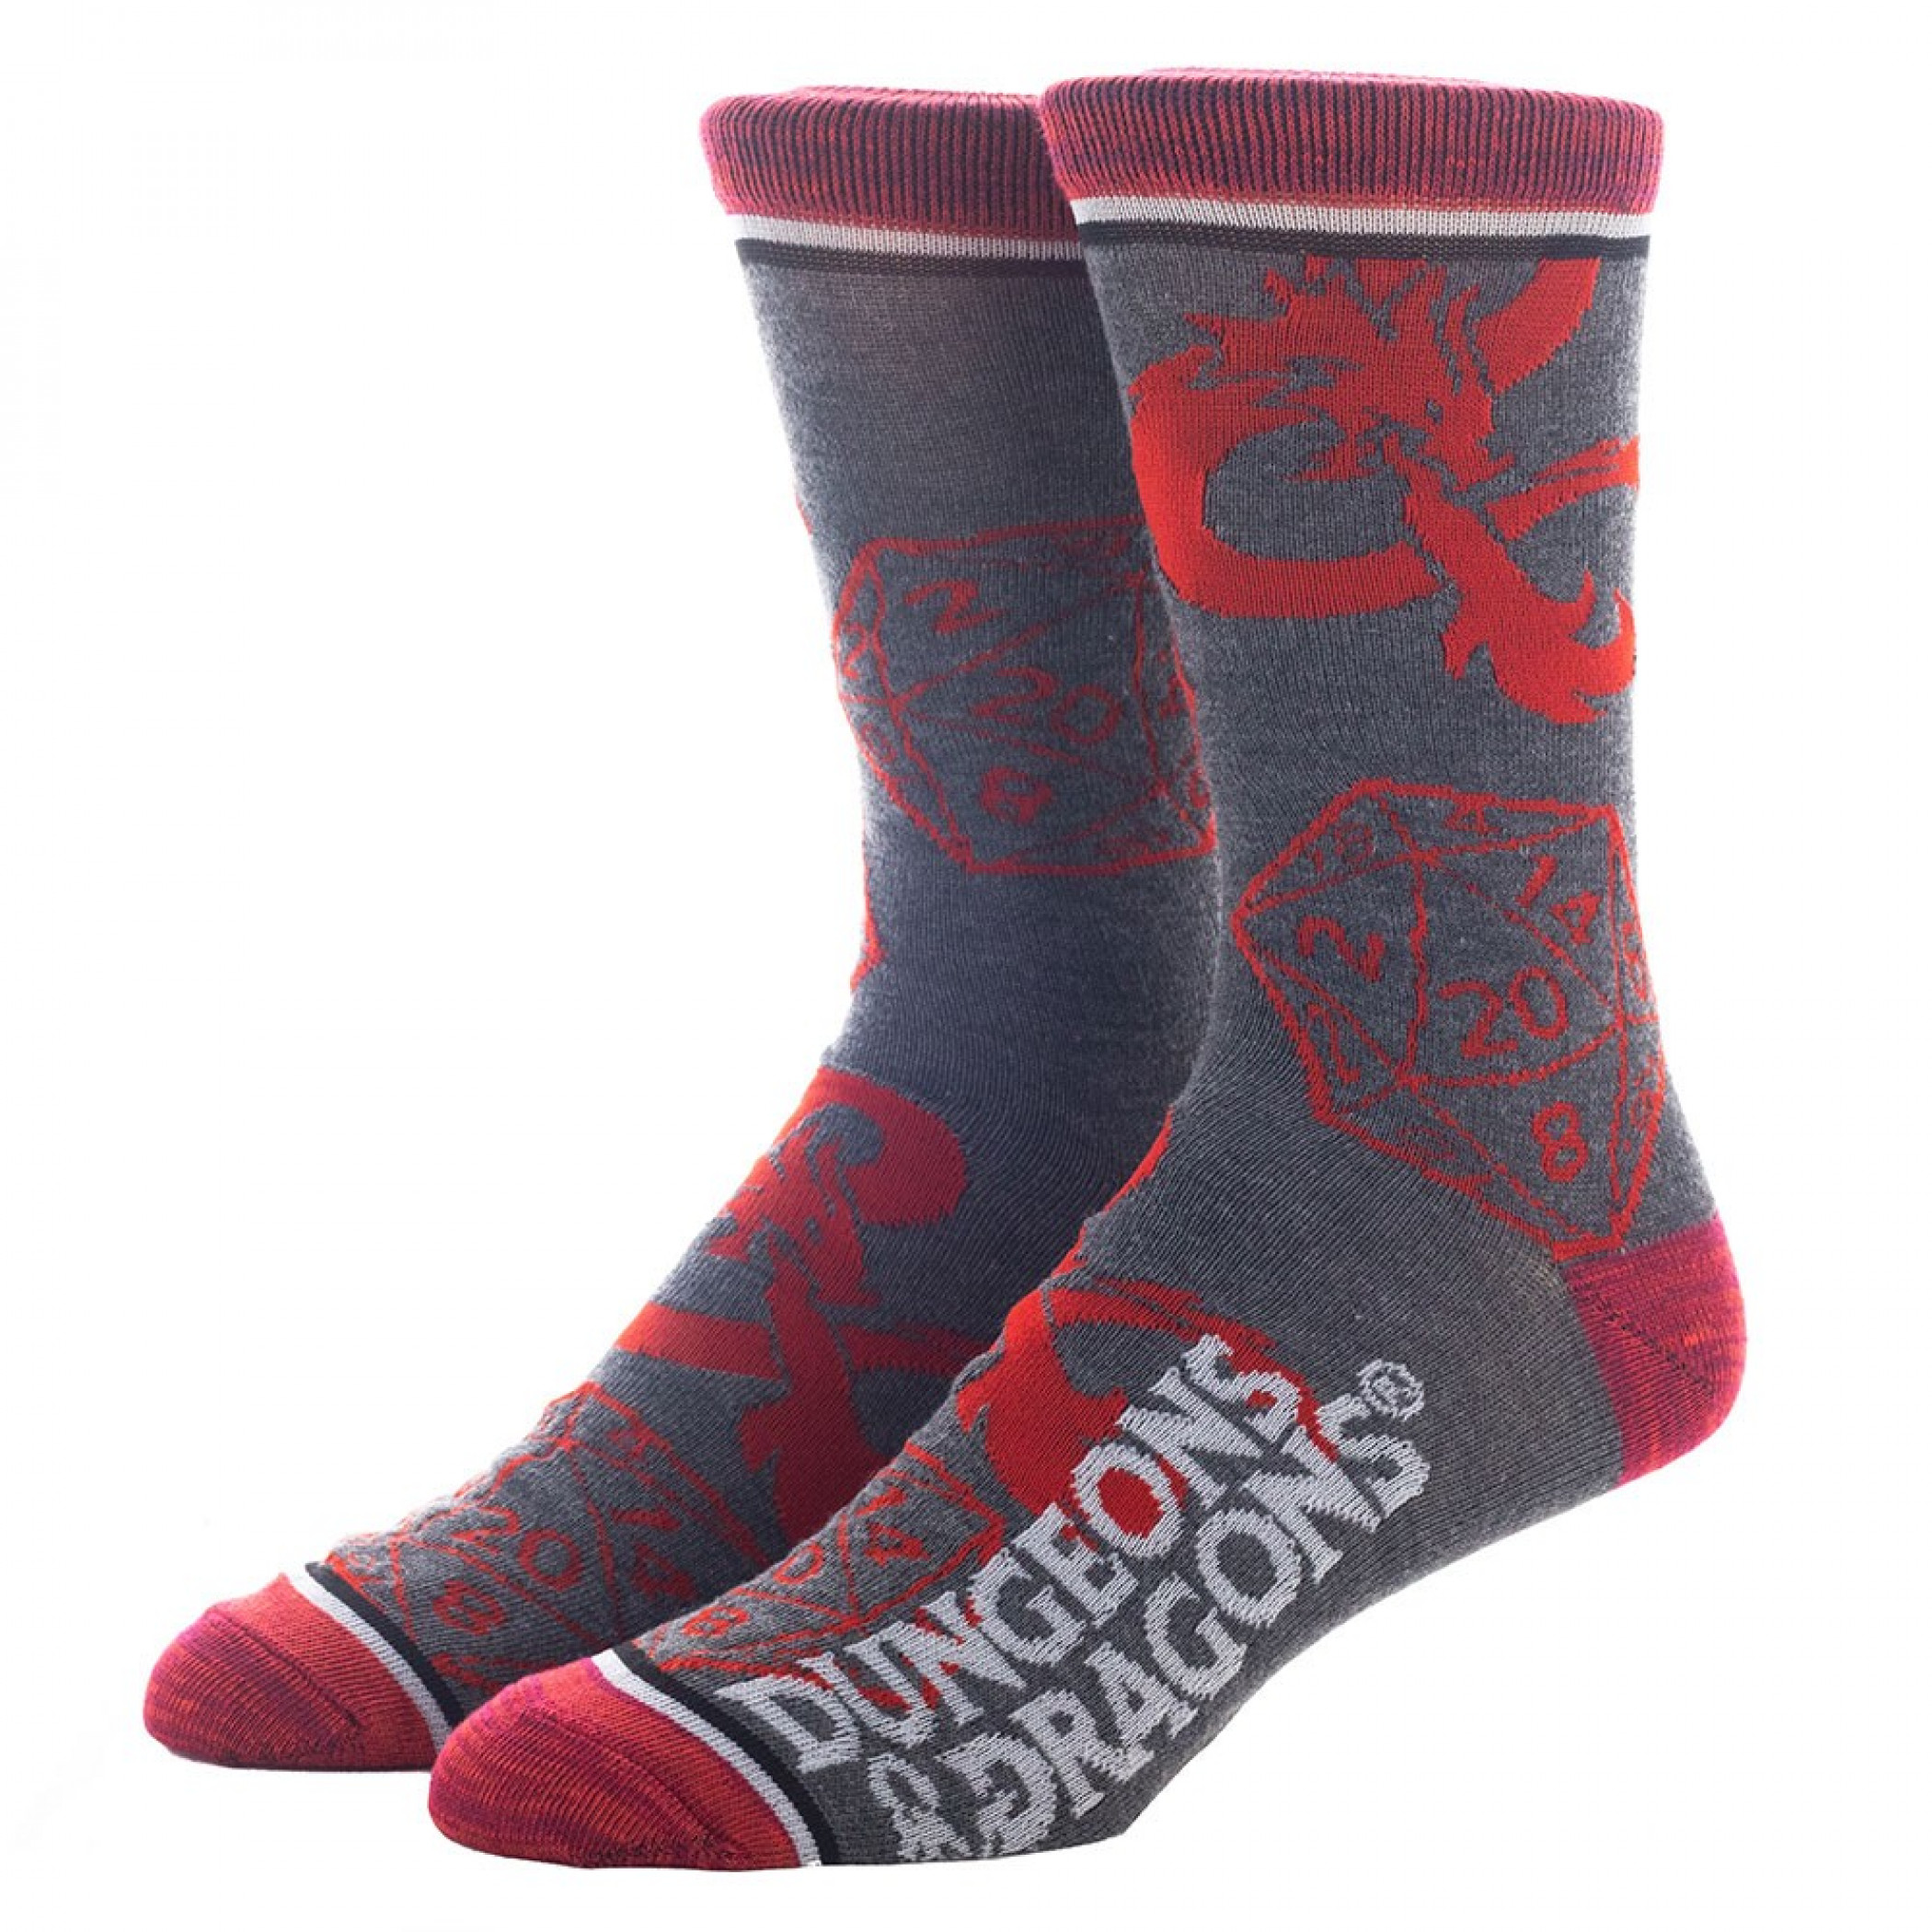 Dungeons & Dragons 3-Pair Pack of Crew Socks